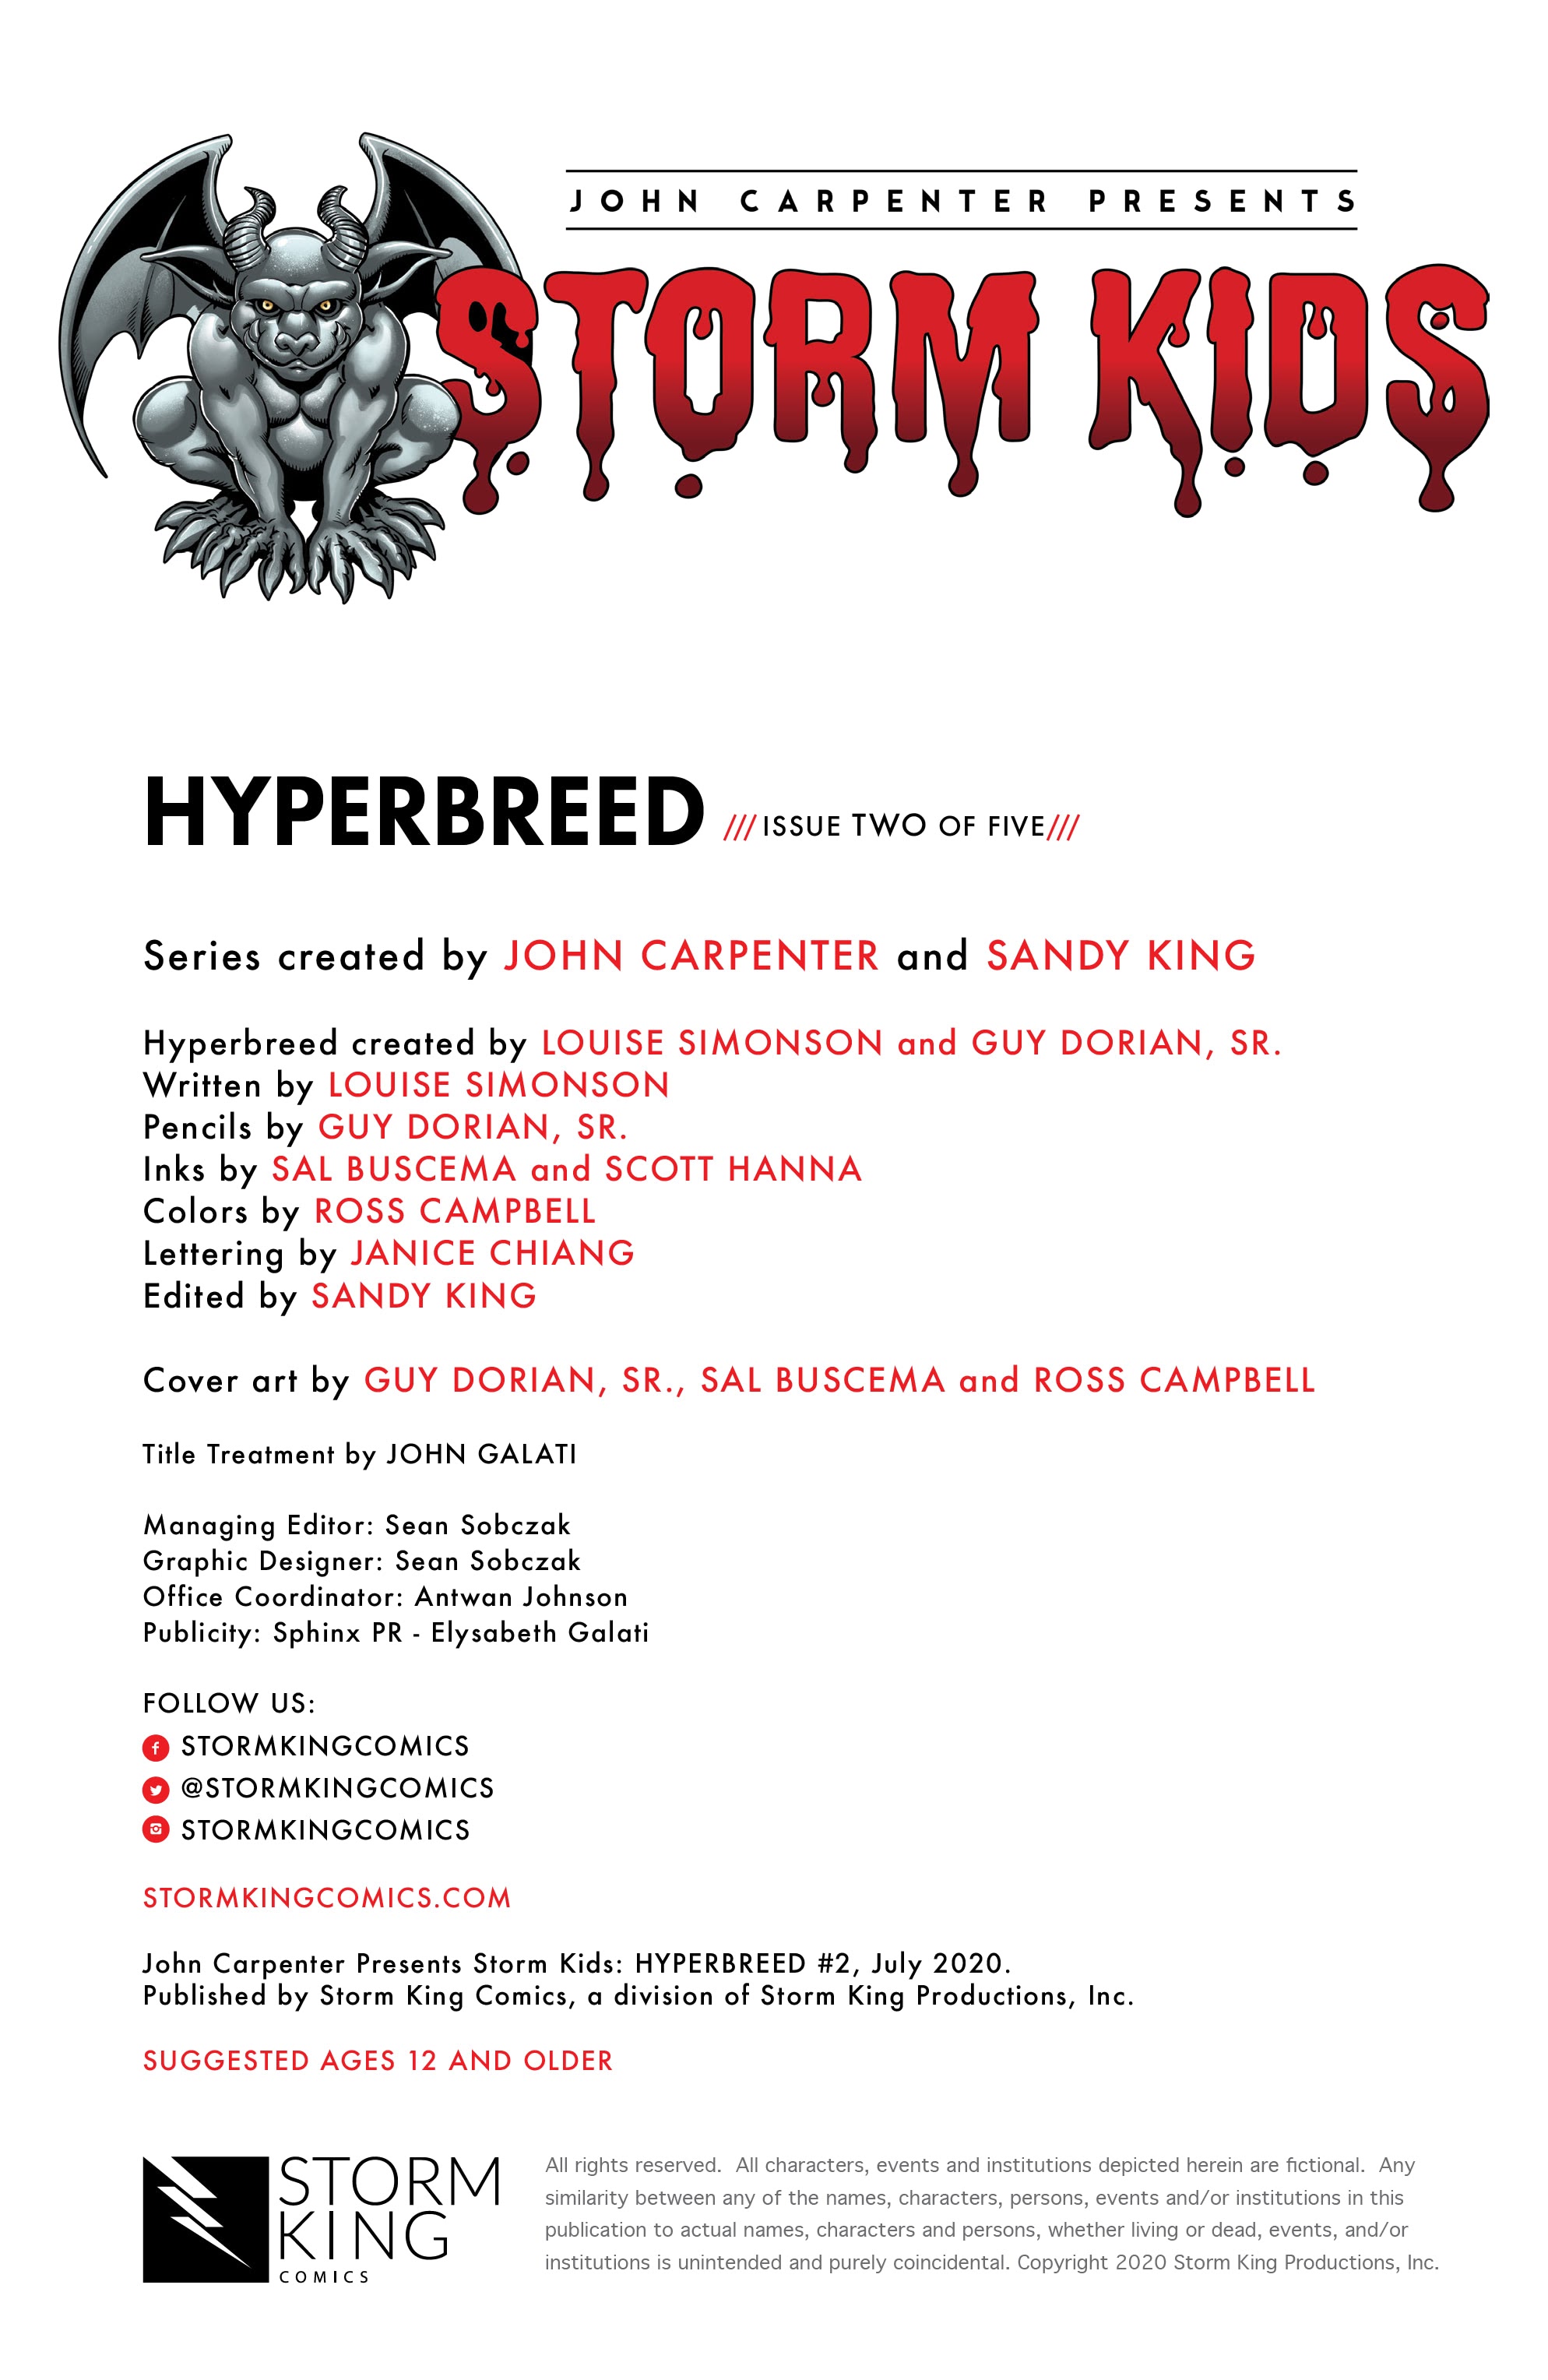 Read online John Carpenter Presents Storm Kids: Hyperbreed comic -  Issue #2 - 2